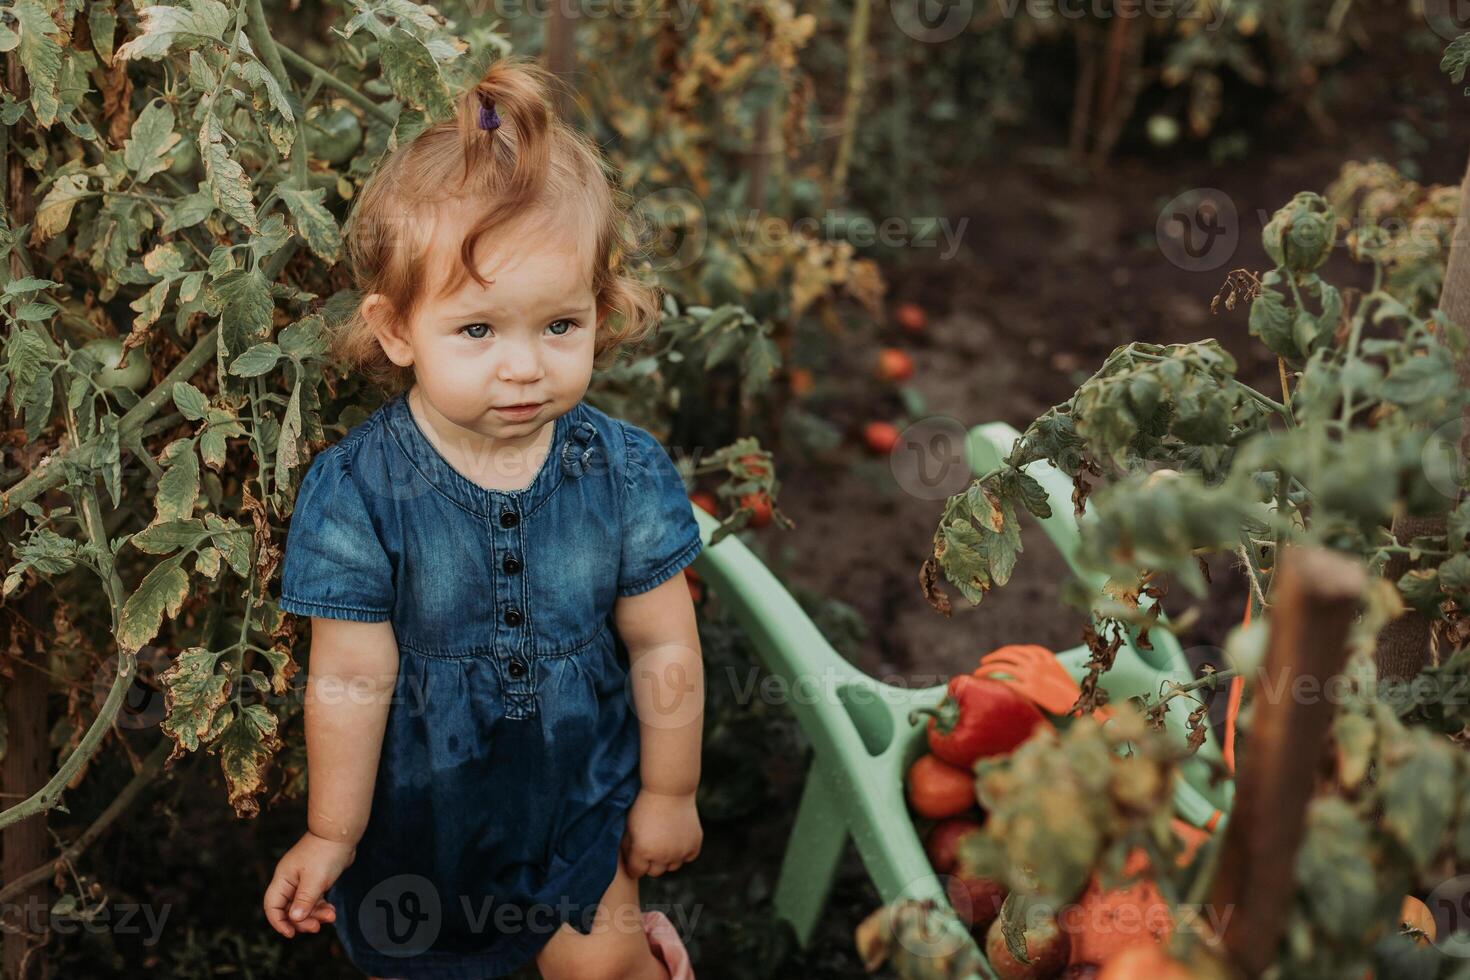 weinig meisje in jurk, rubber laarzen en een rietje hoed is water geven, irrigeren planten in de herfst tuin foto